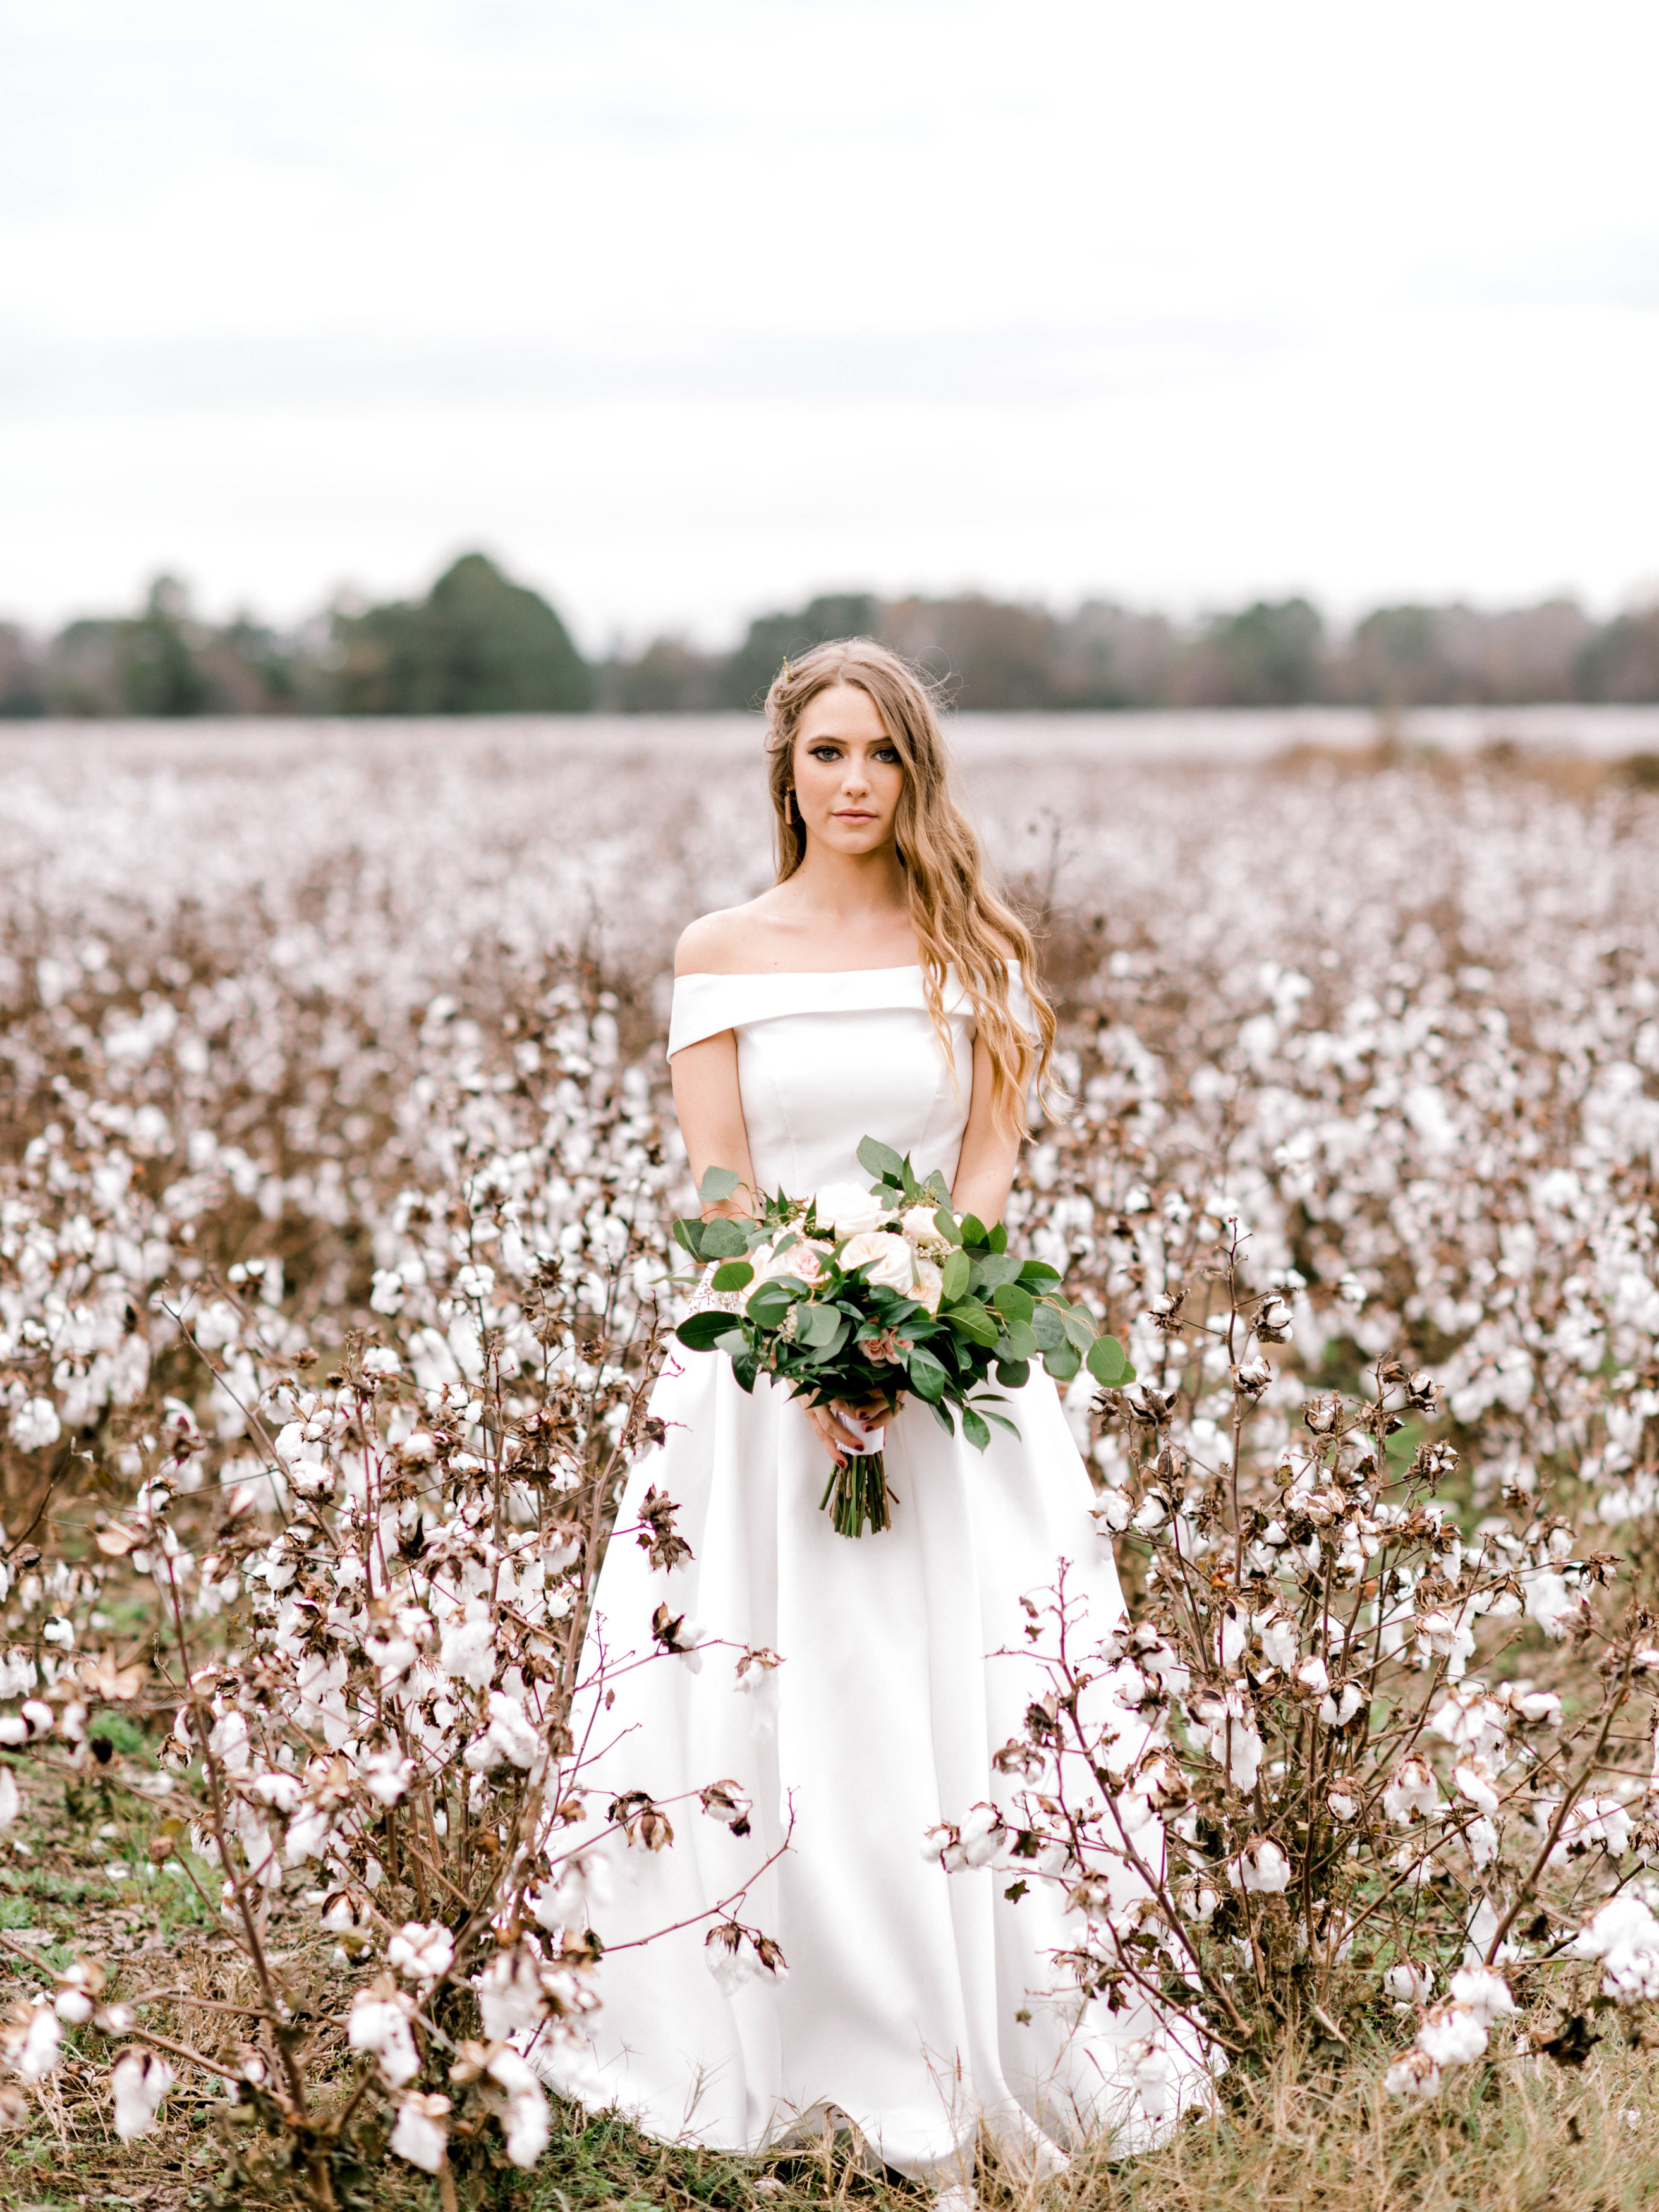 Woodlawn Planation Bride in cotton field winter wedding